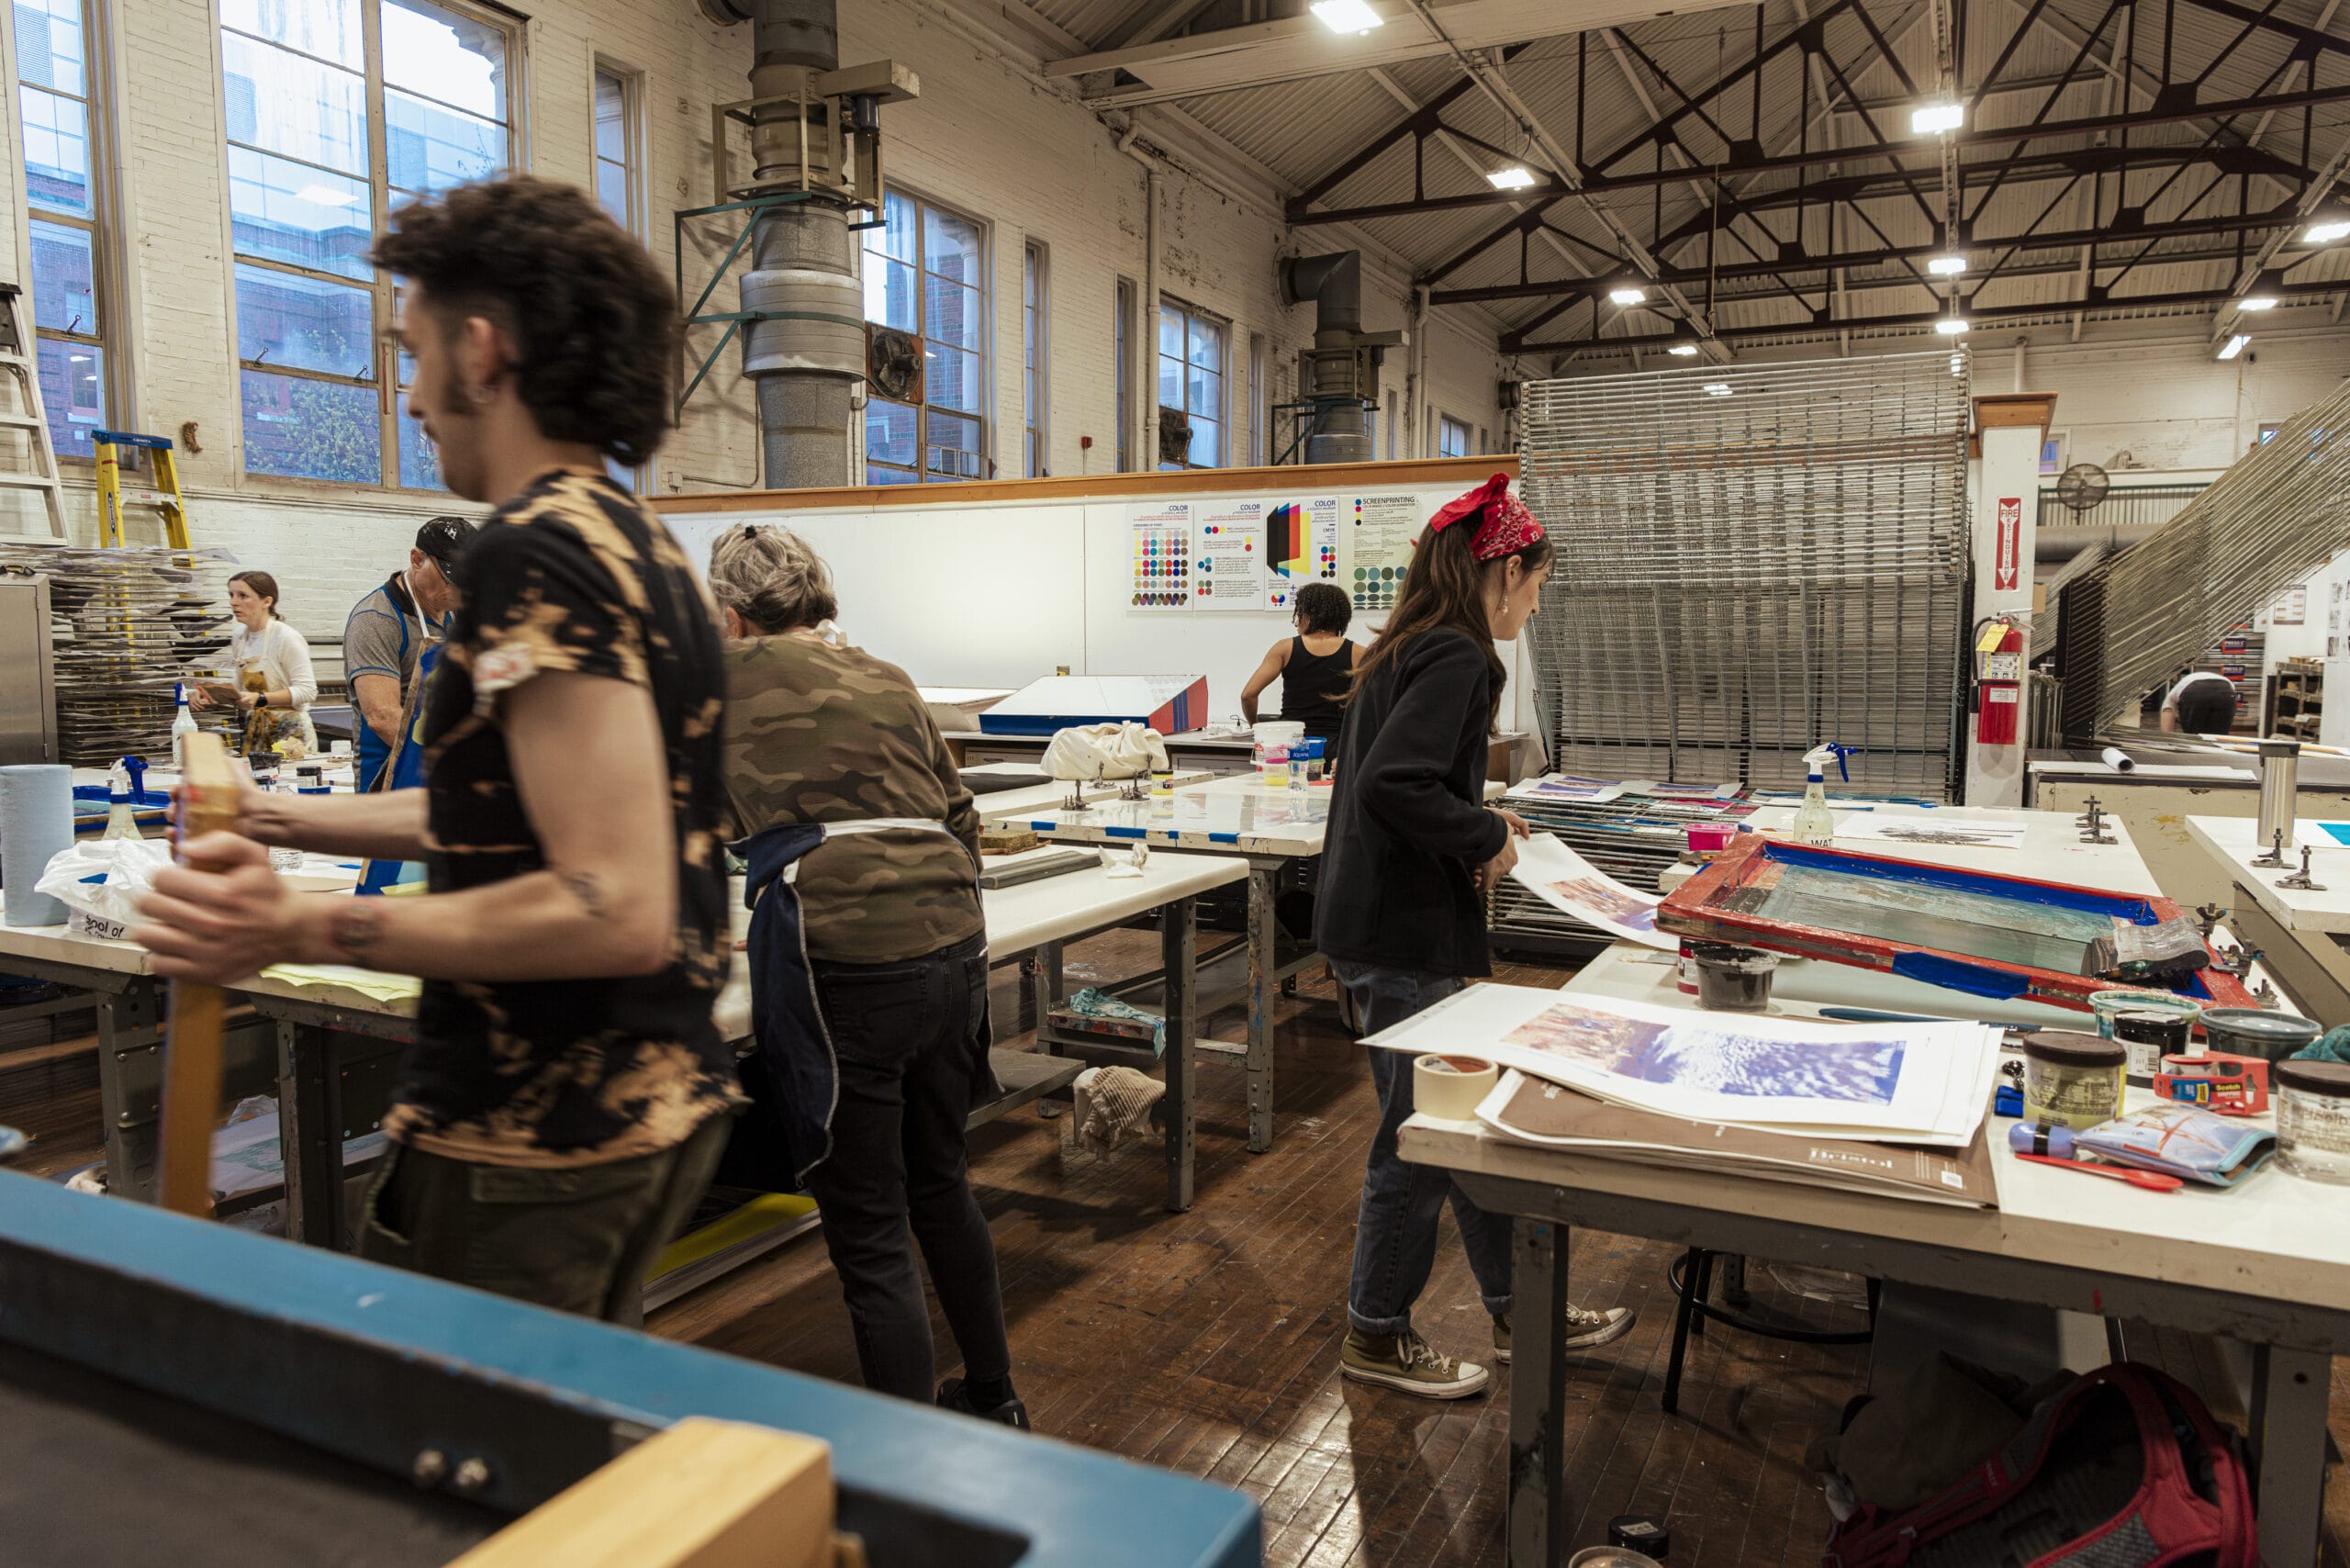 Students working in the Silkscreening area of MassArt's Print Studio/Print Shop